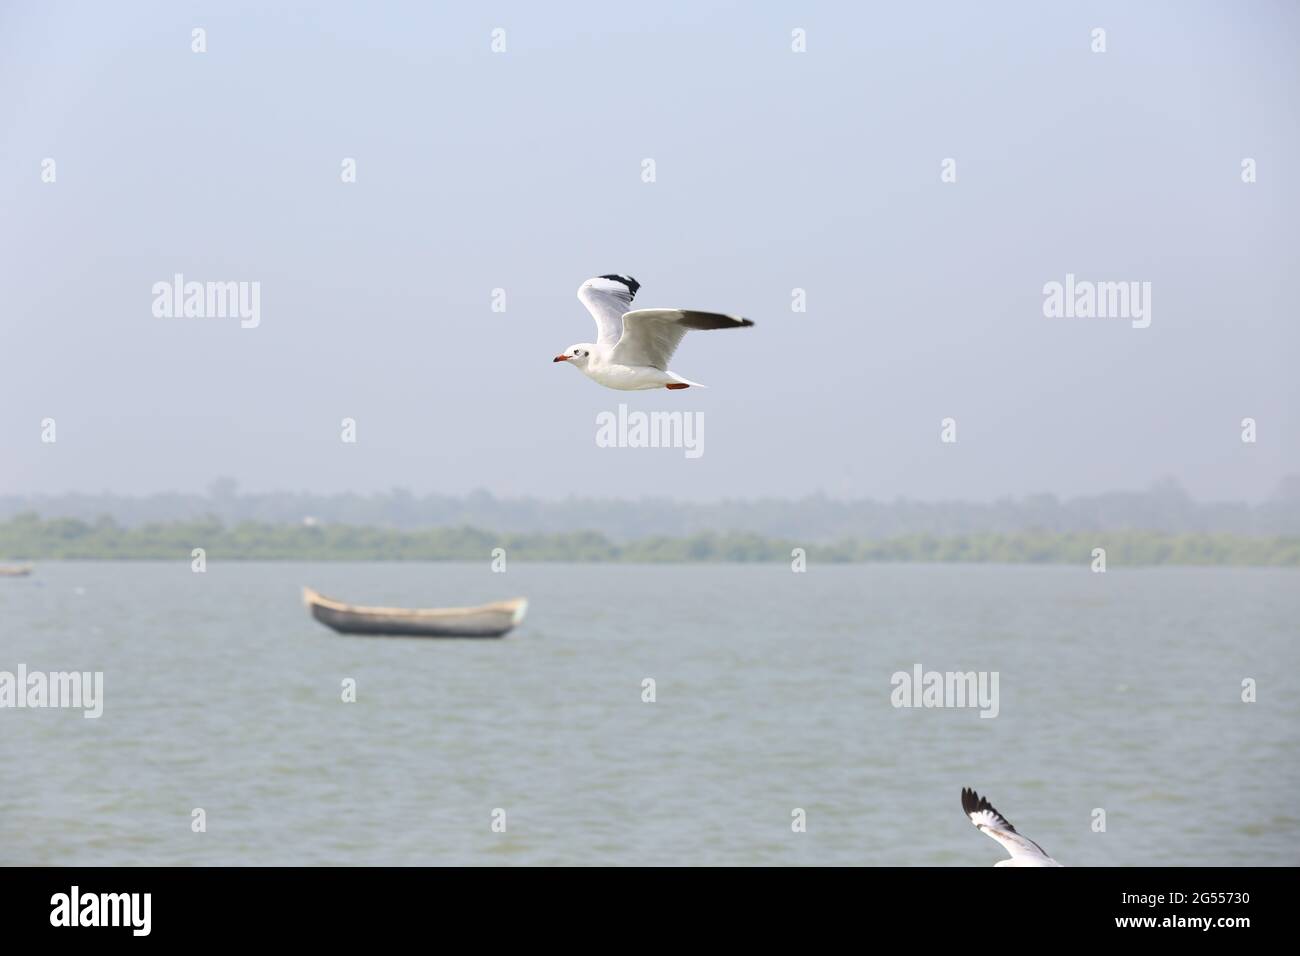 Black headed gull soaring among green woods in Bangladesh Stock Photo